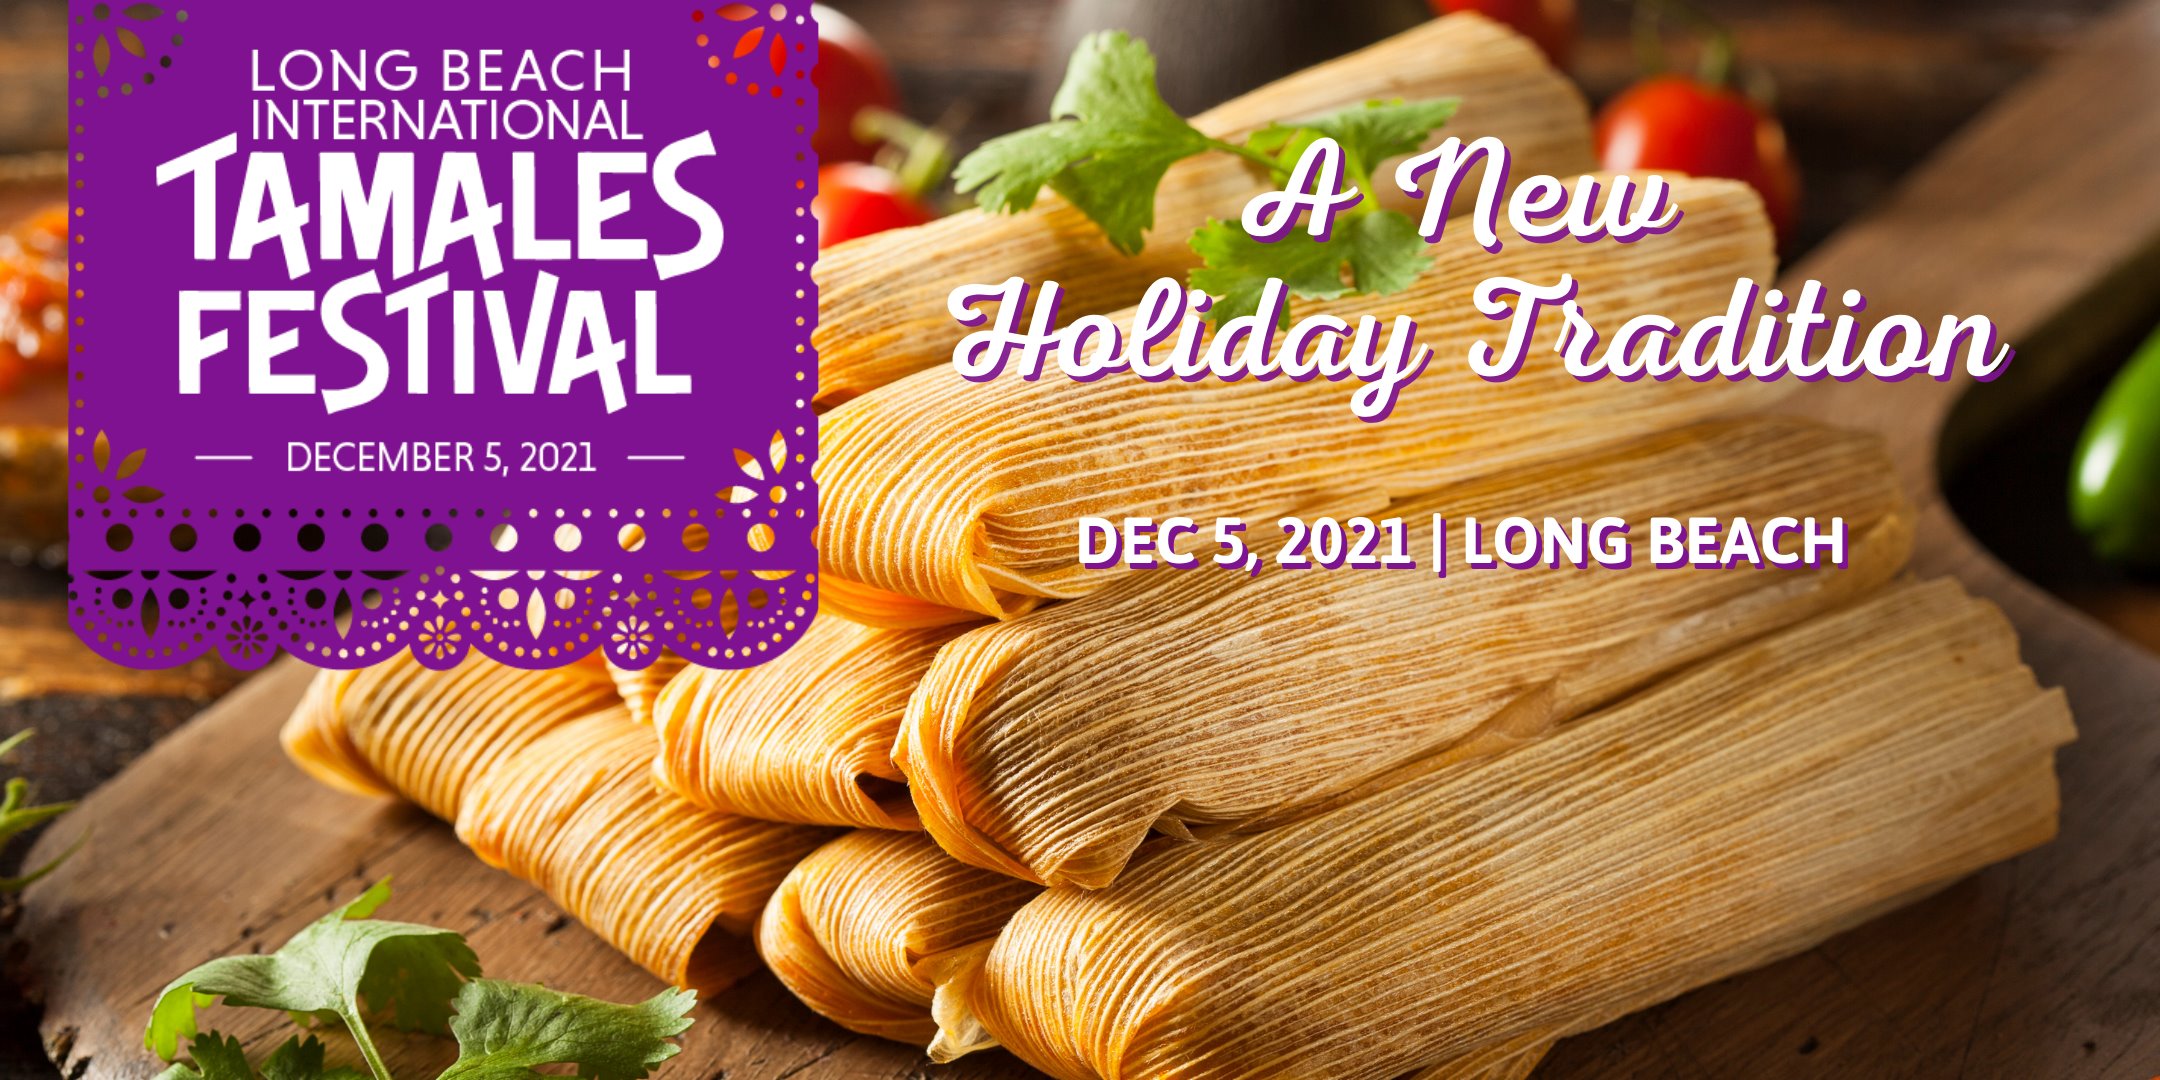 Long Beach International Tamales Festival